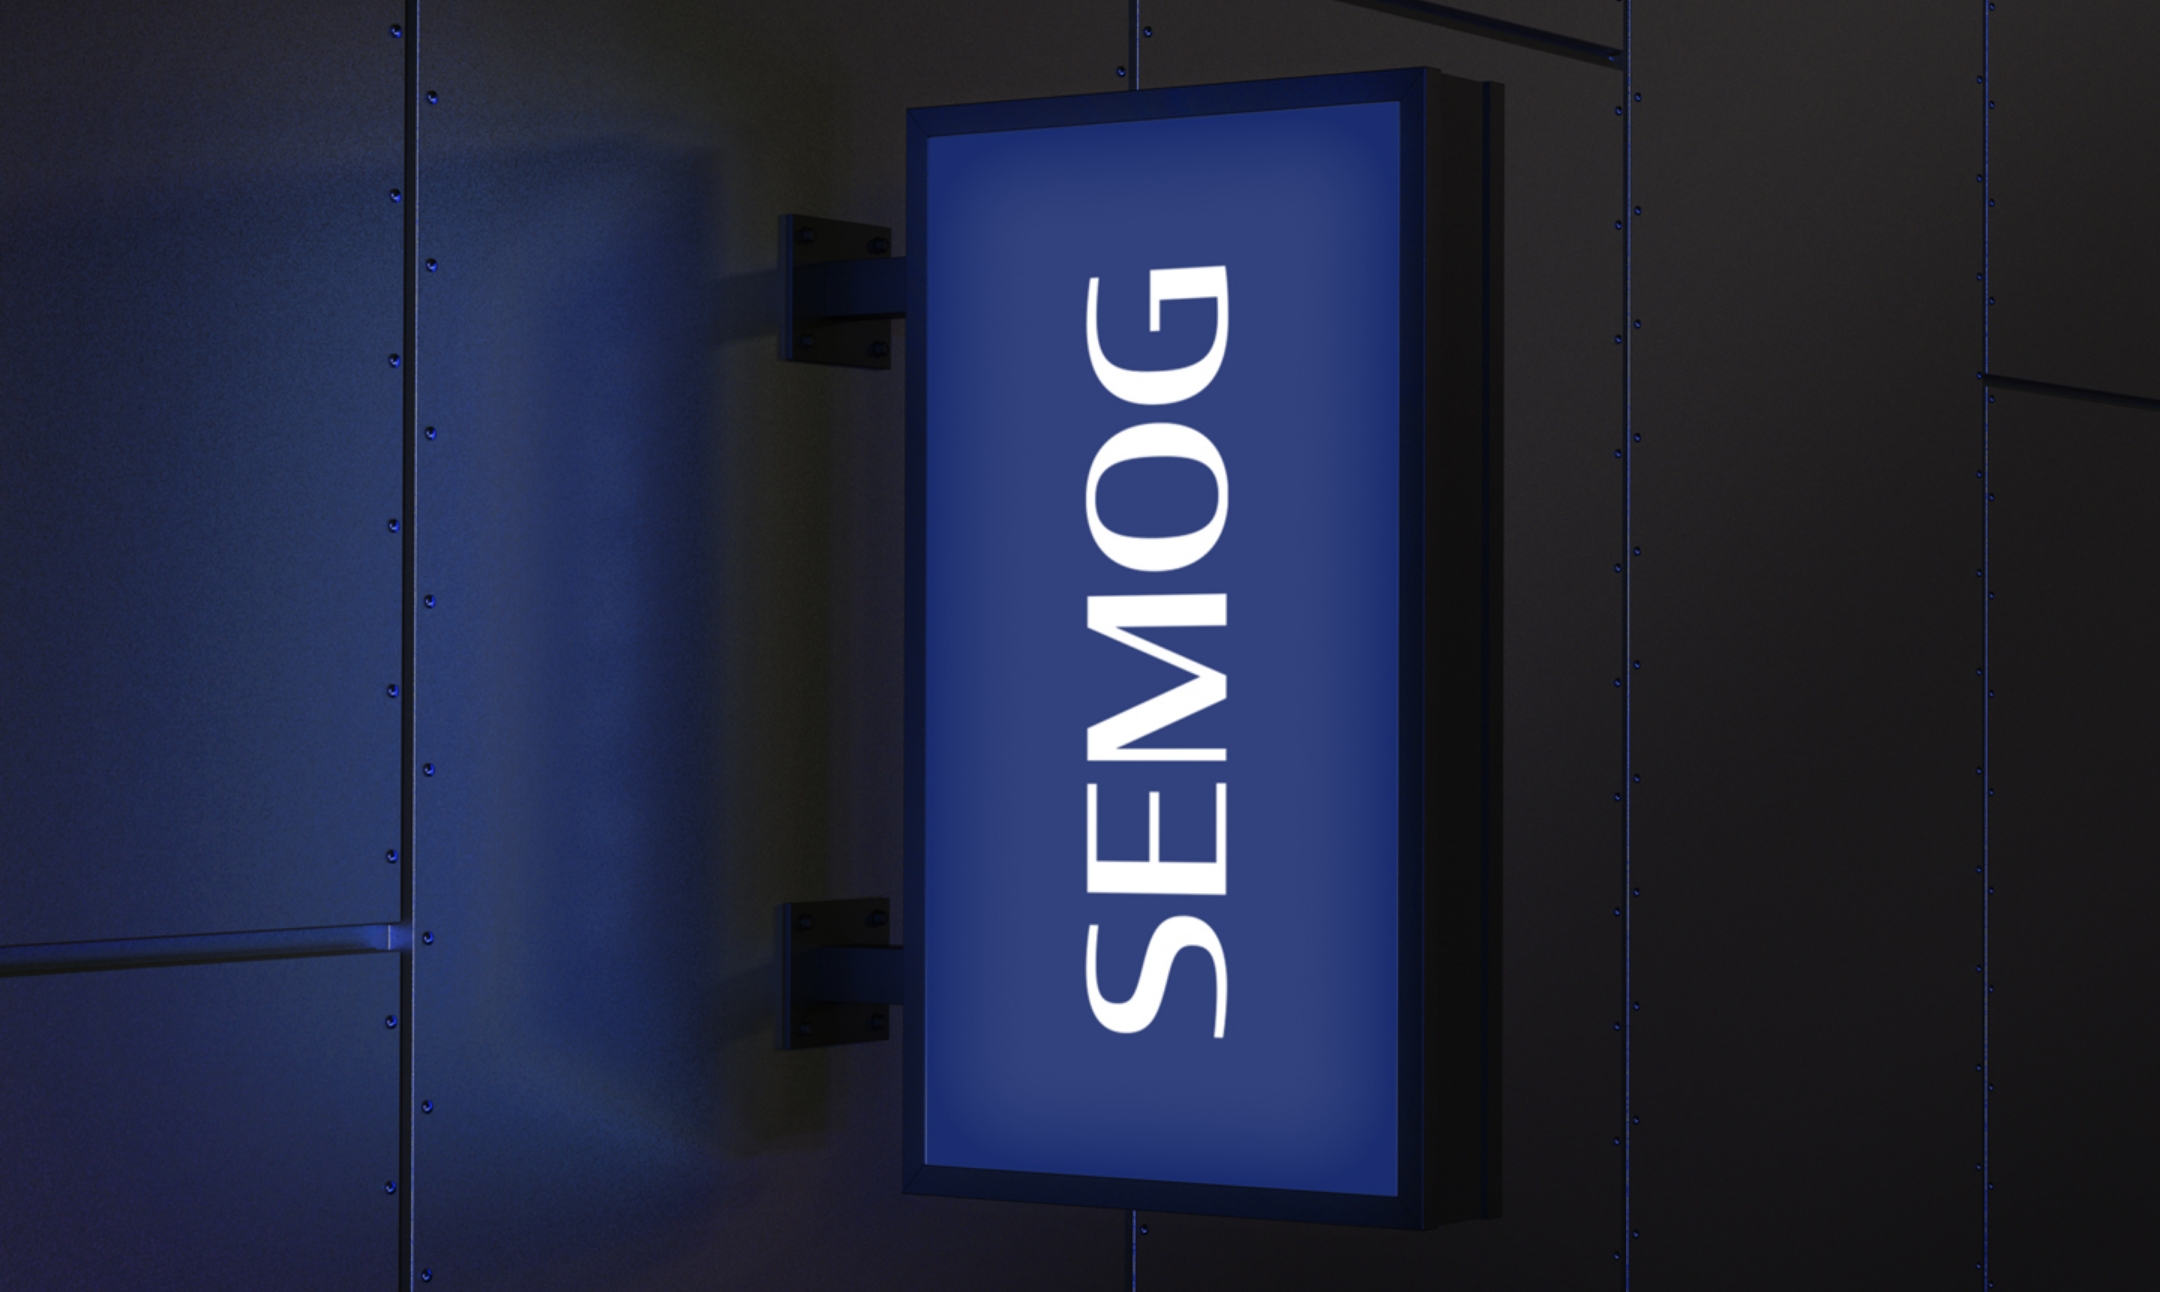 Strengthening Semog’s Market Presence Through Brand Redesign